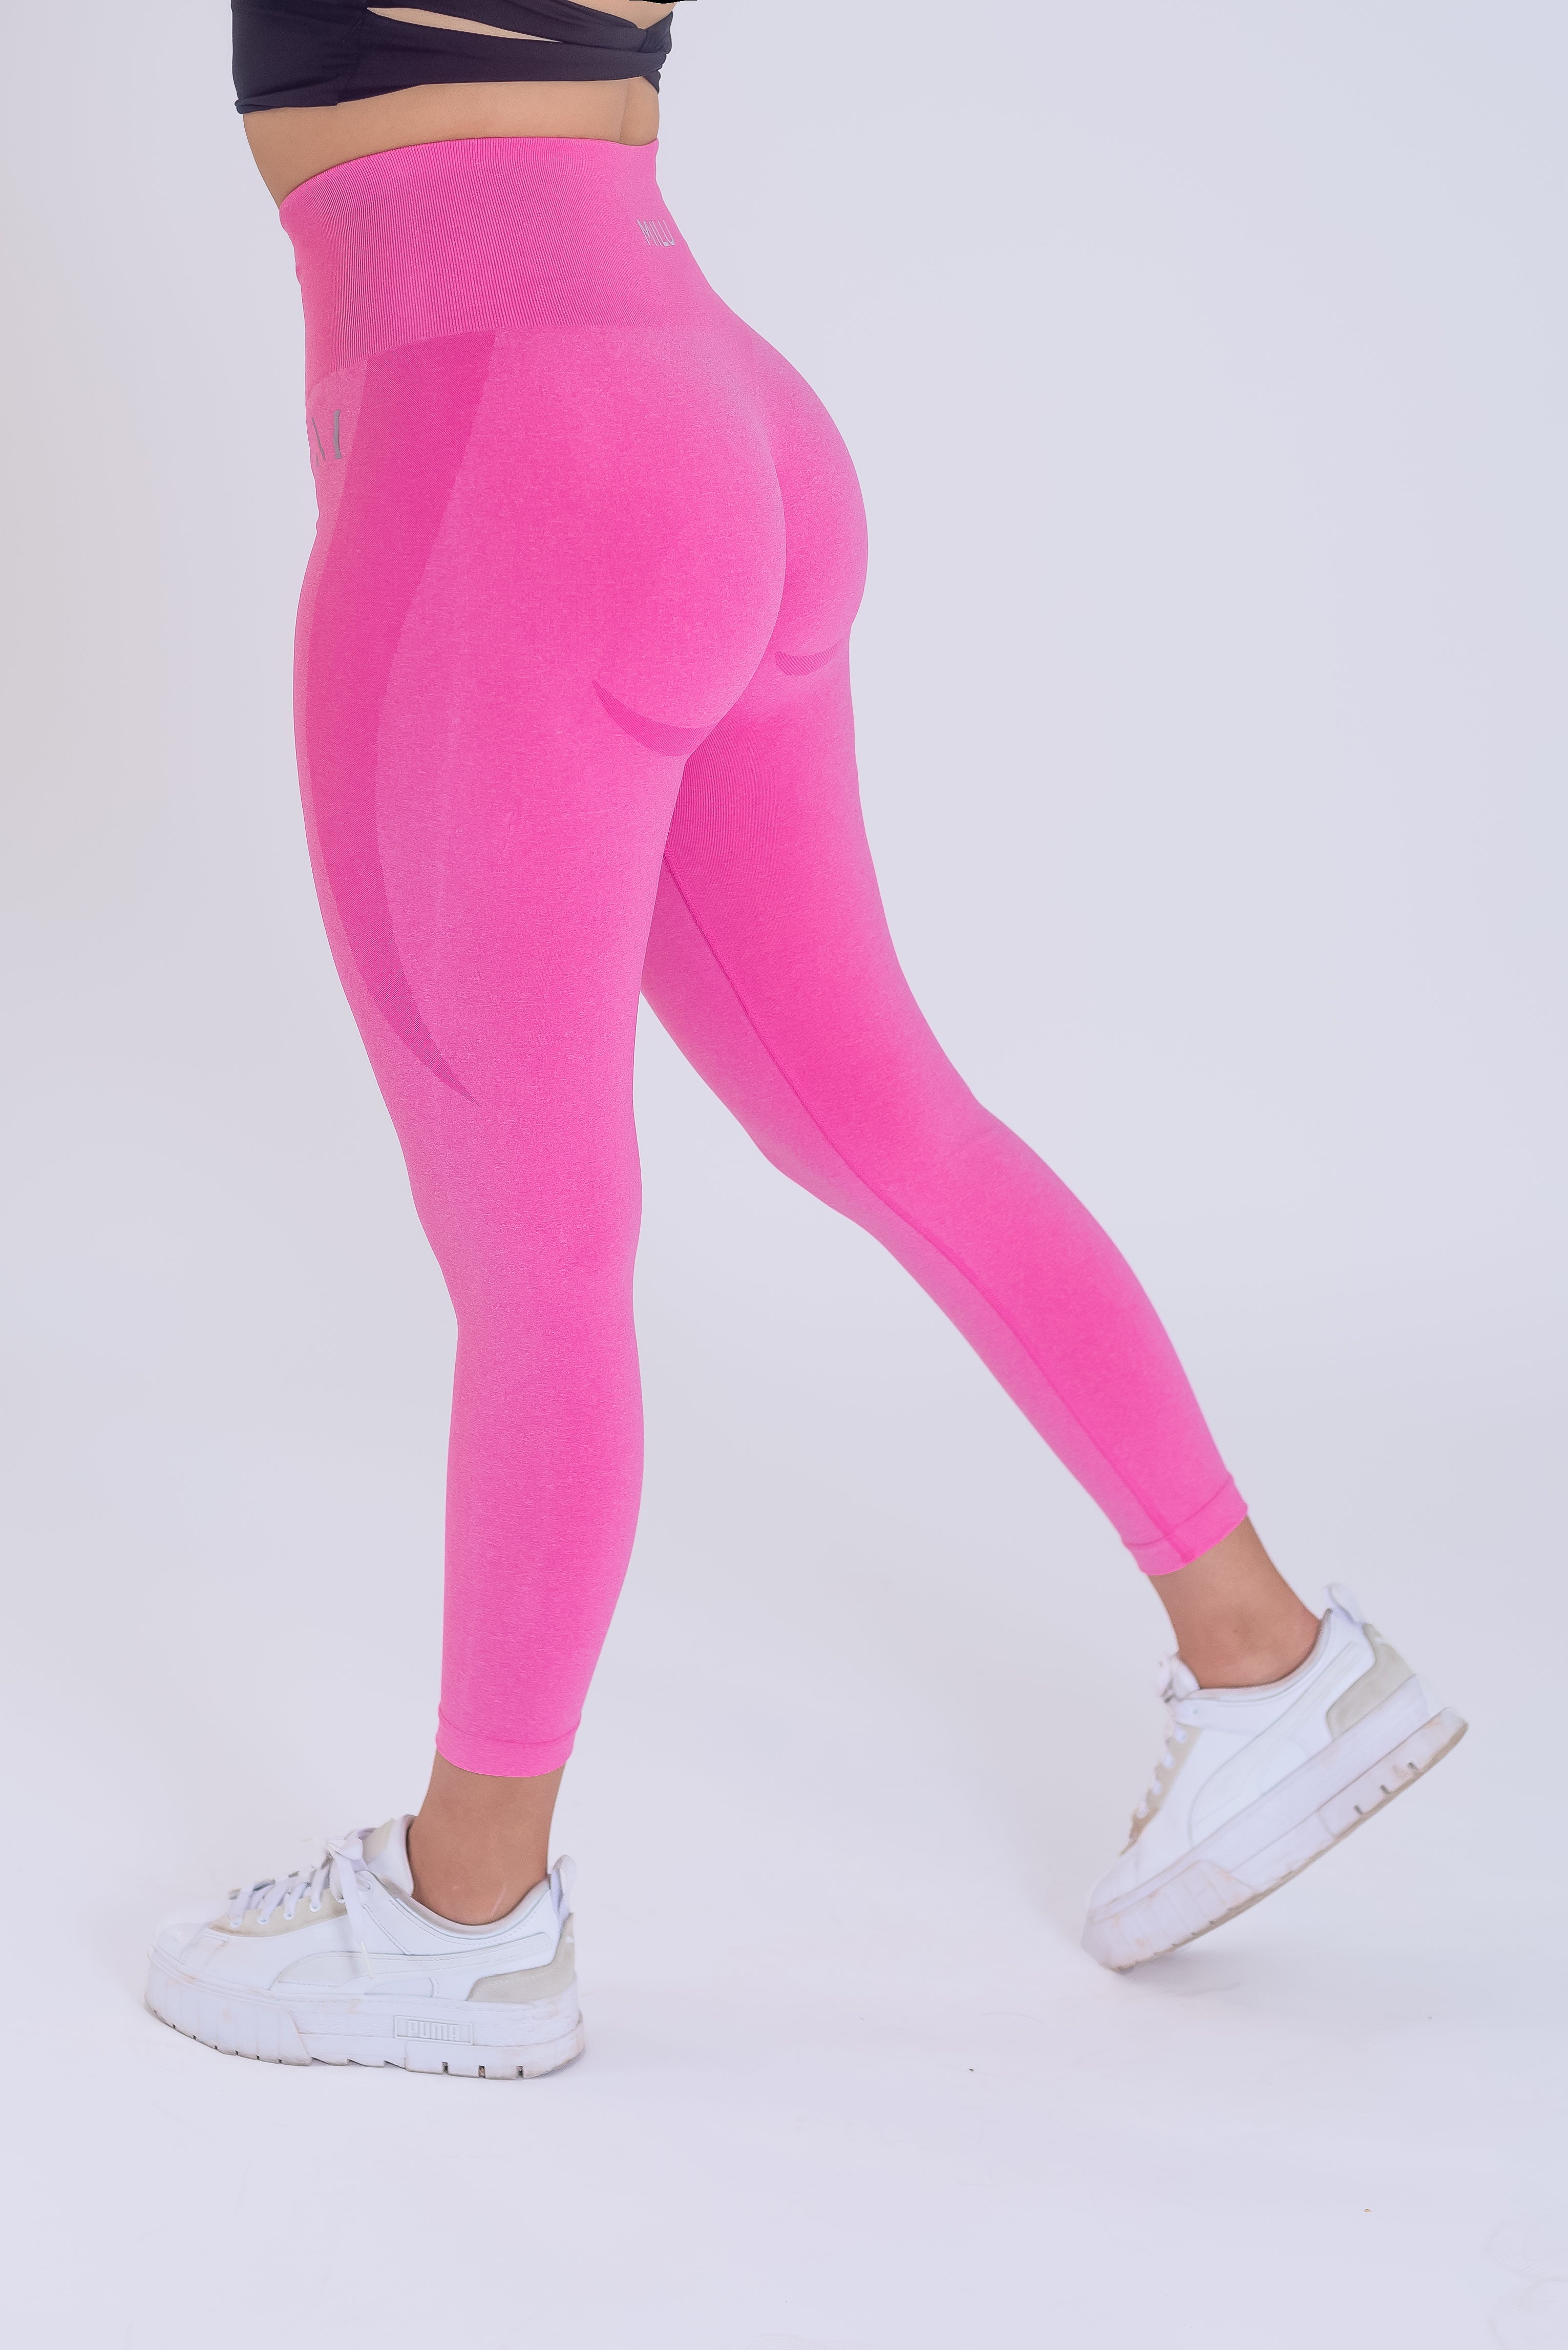 Lift Legging - Neon Pink – Milu.athletics